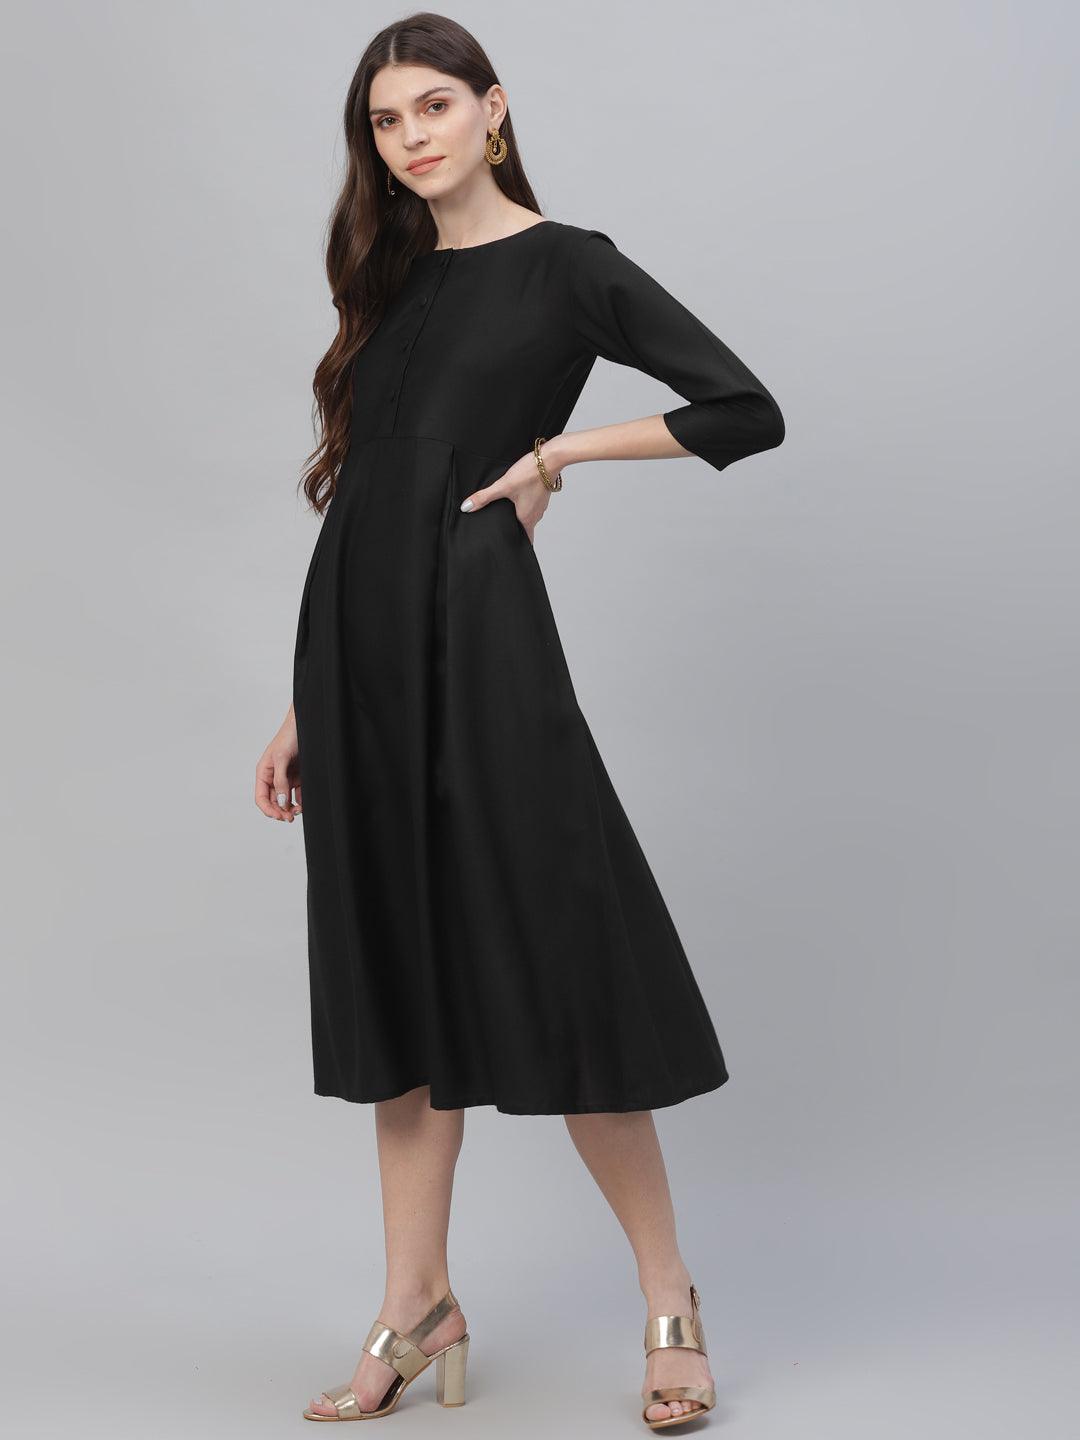 Black Solid Cotton Dress